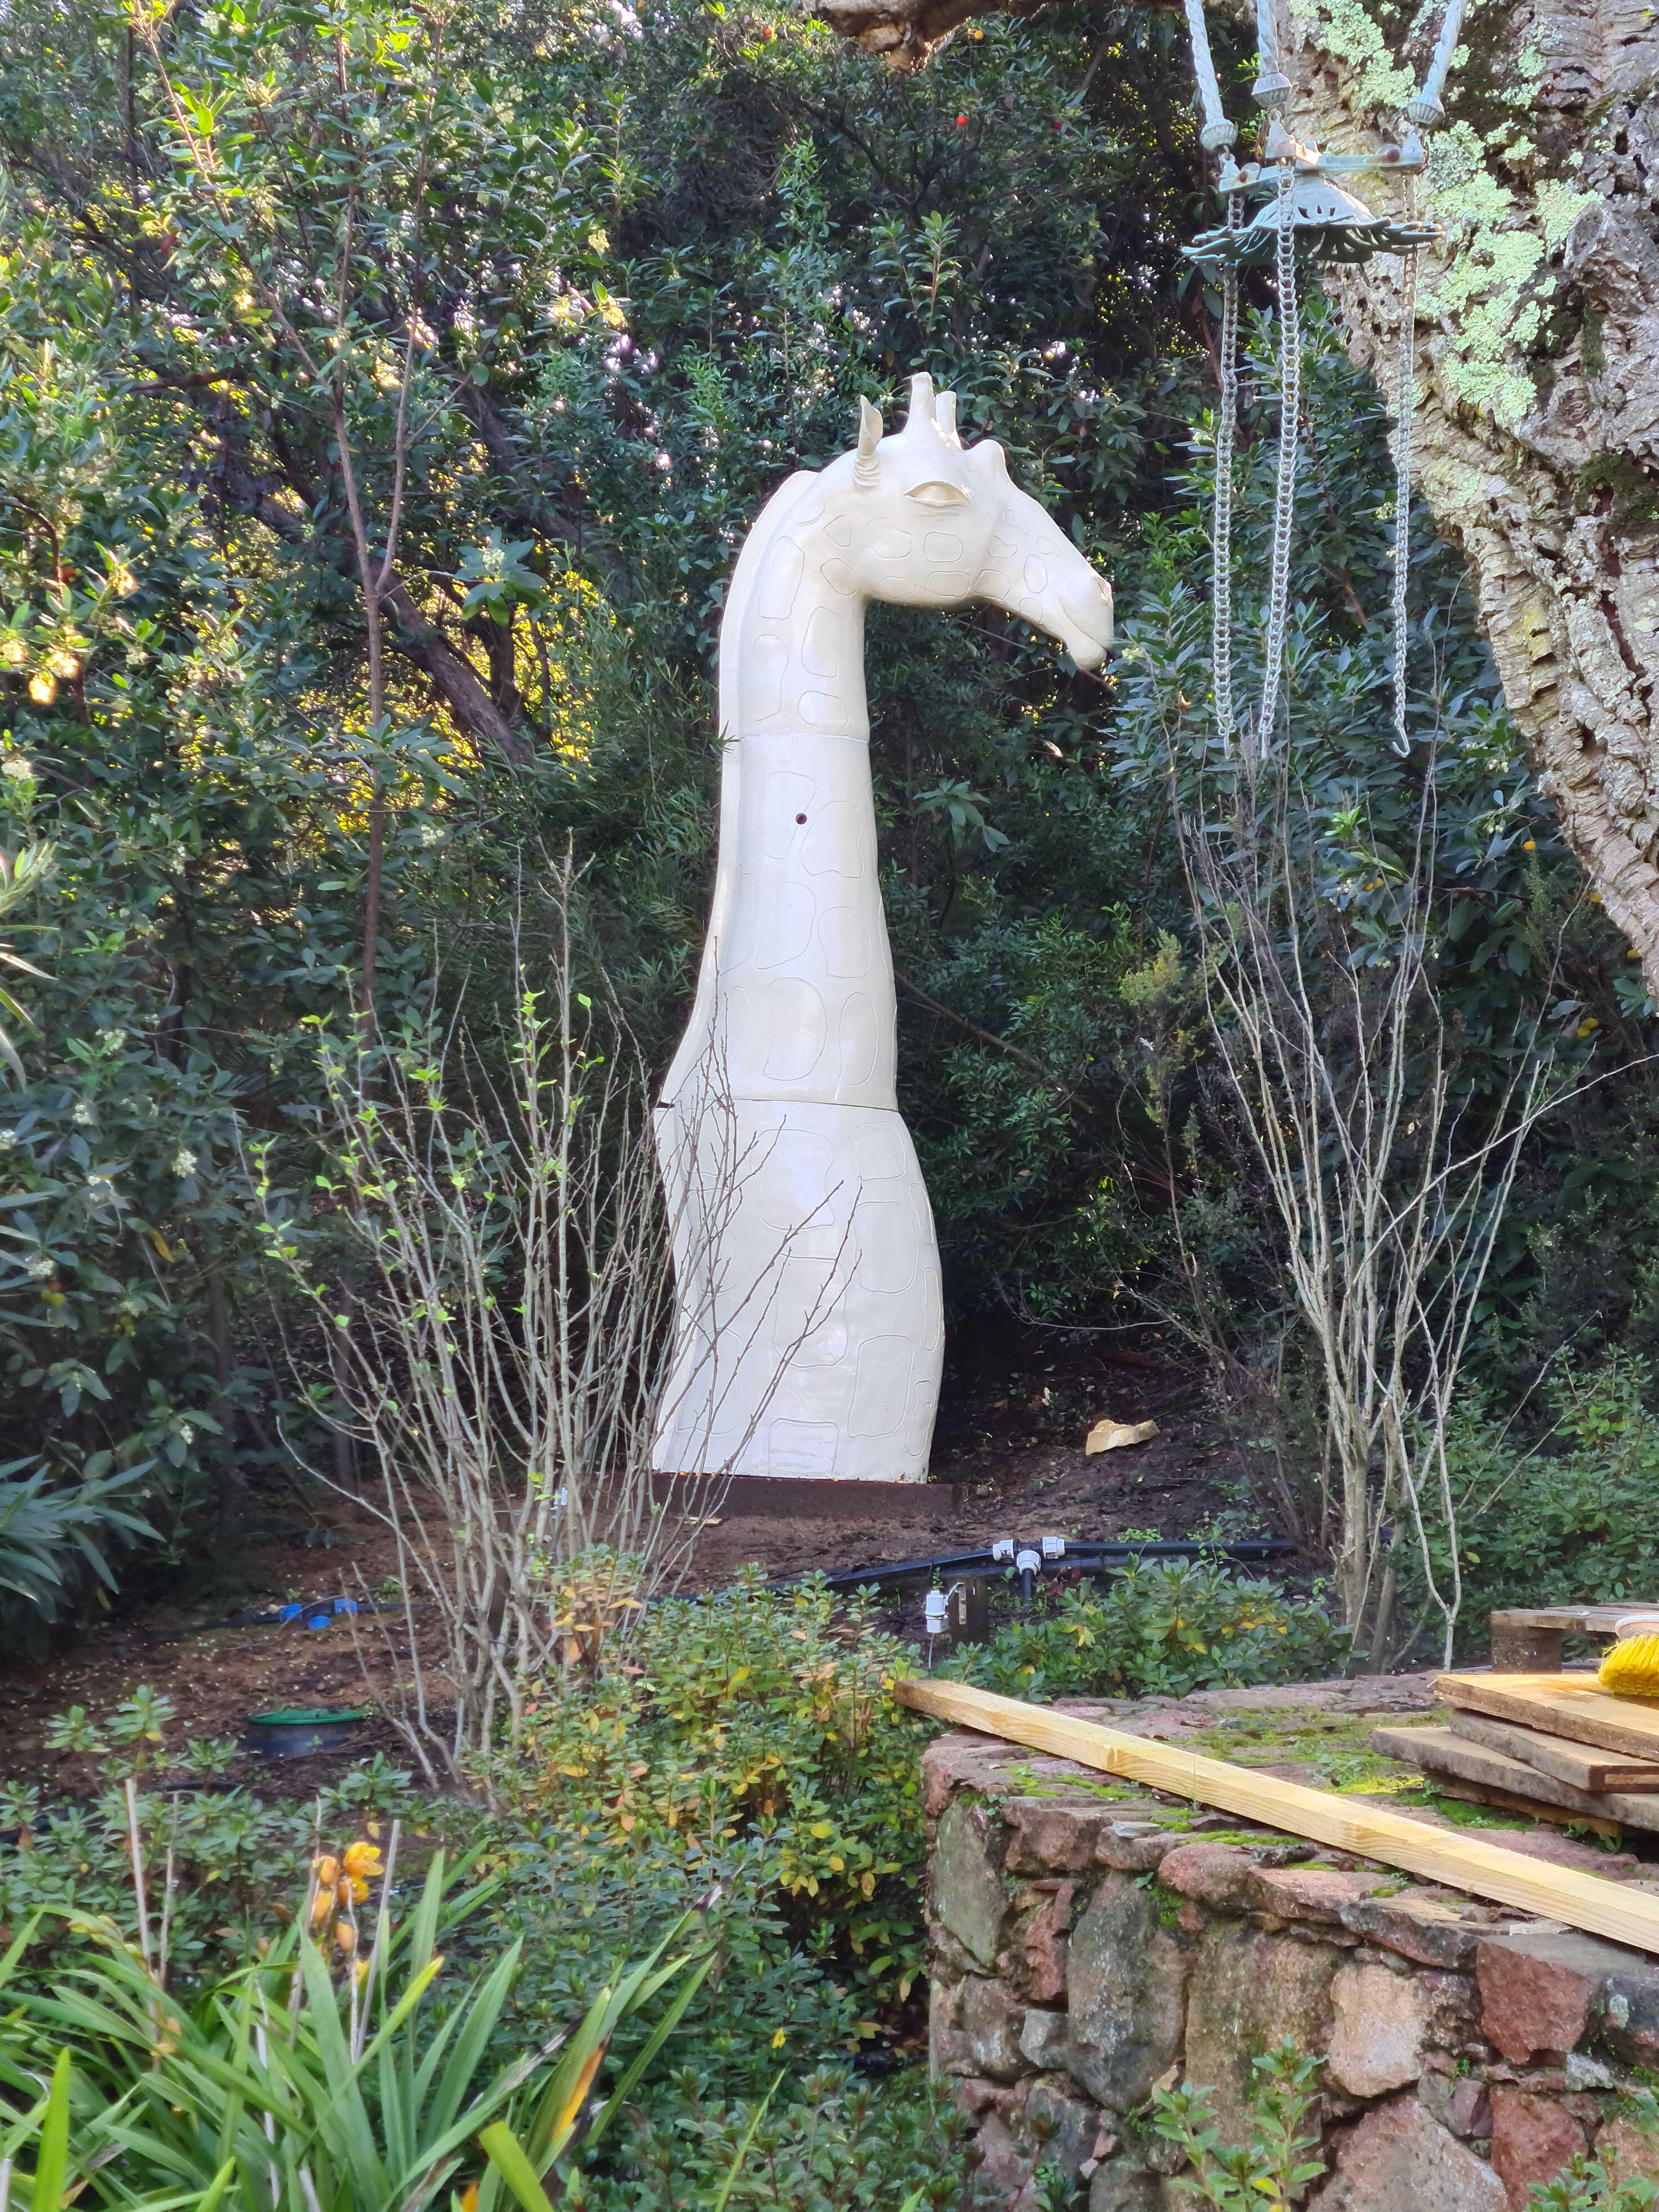 Giraffe - Monumental Contemporary Resin Outdoor Sculpture - Black Figurative Sculpture by Mariko